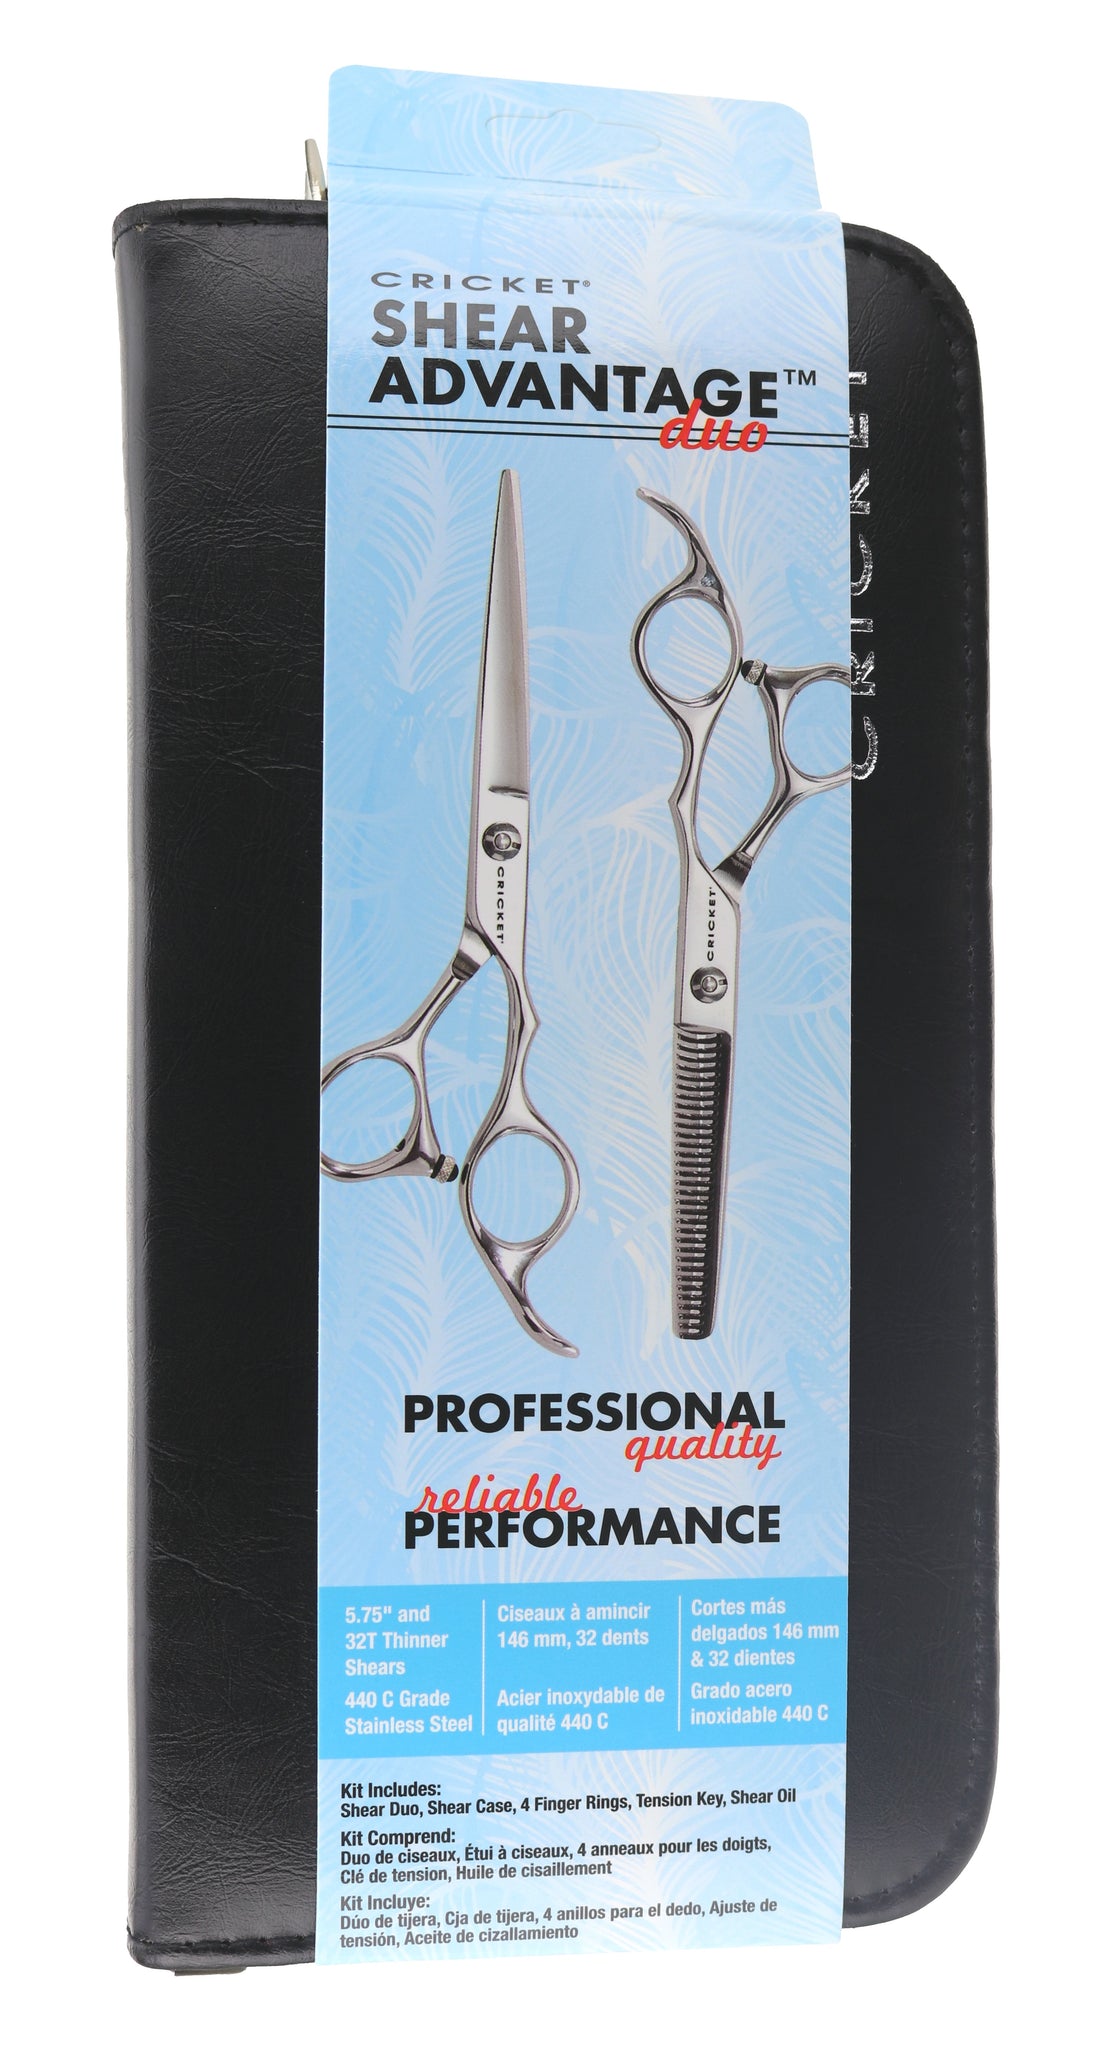 salon quality hair scissors